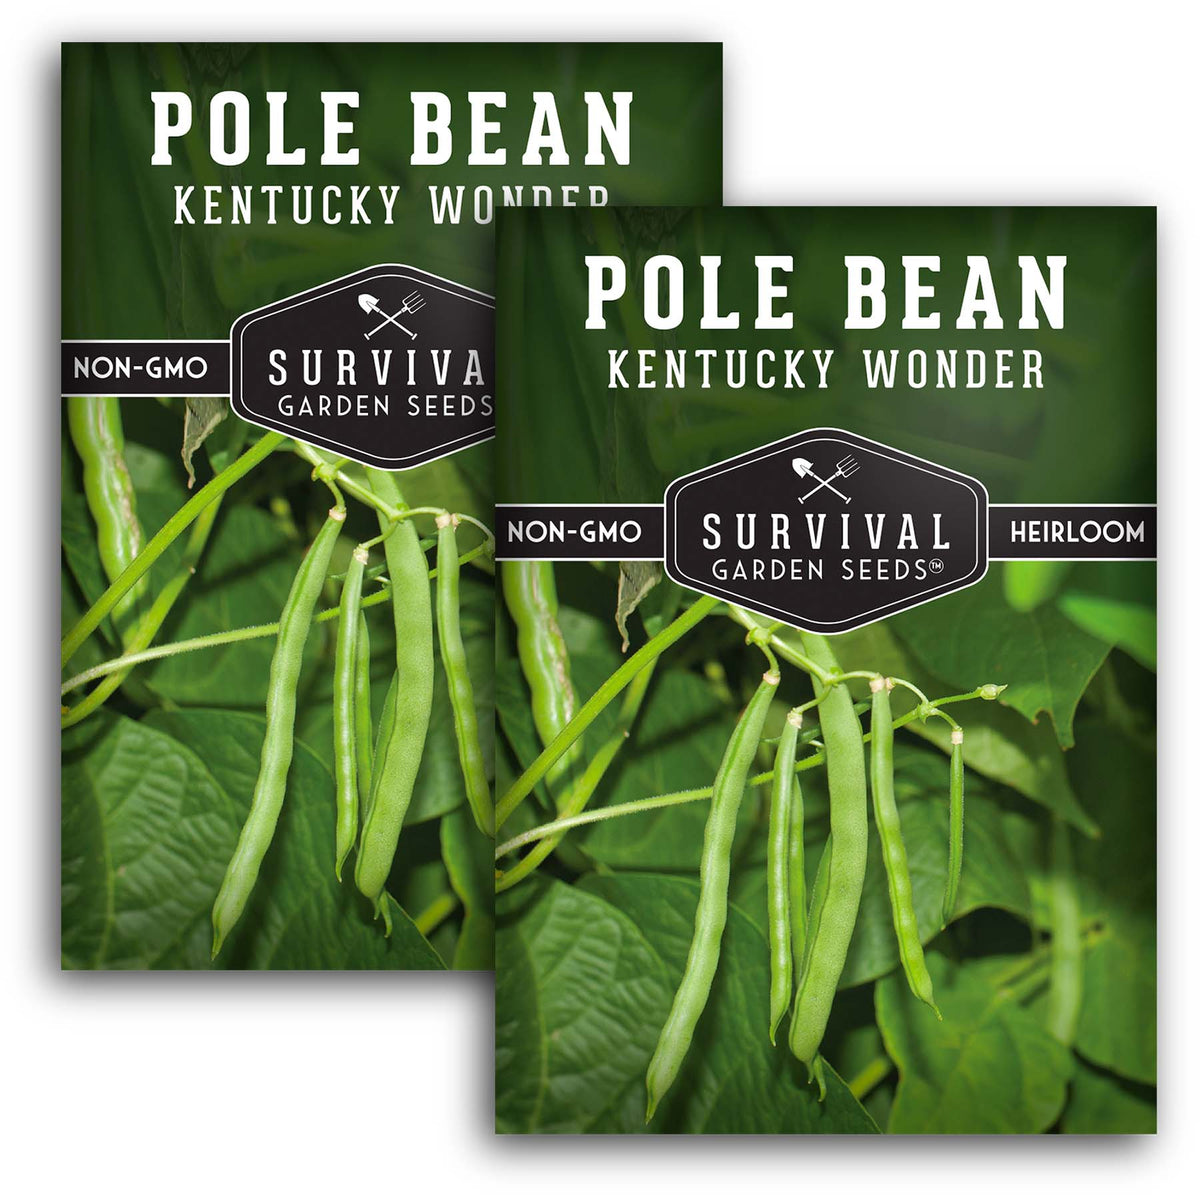 Kentucky Wonder Pole Bean Seed